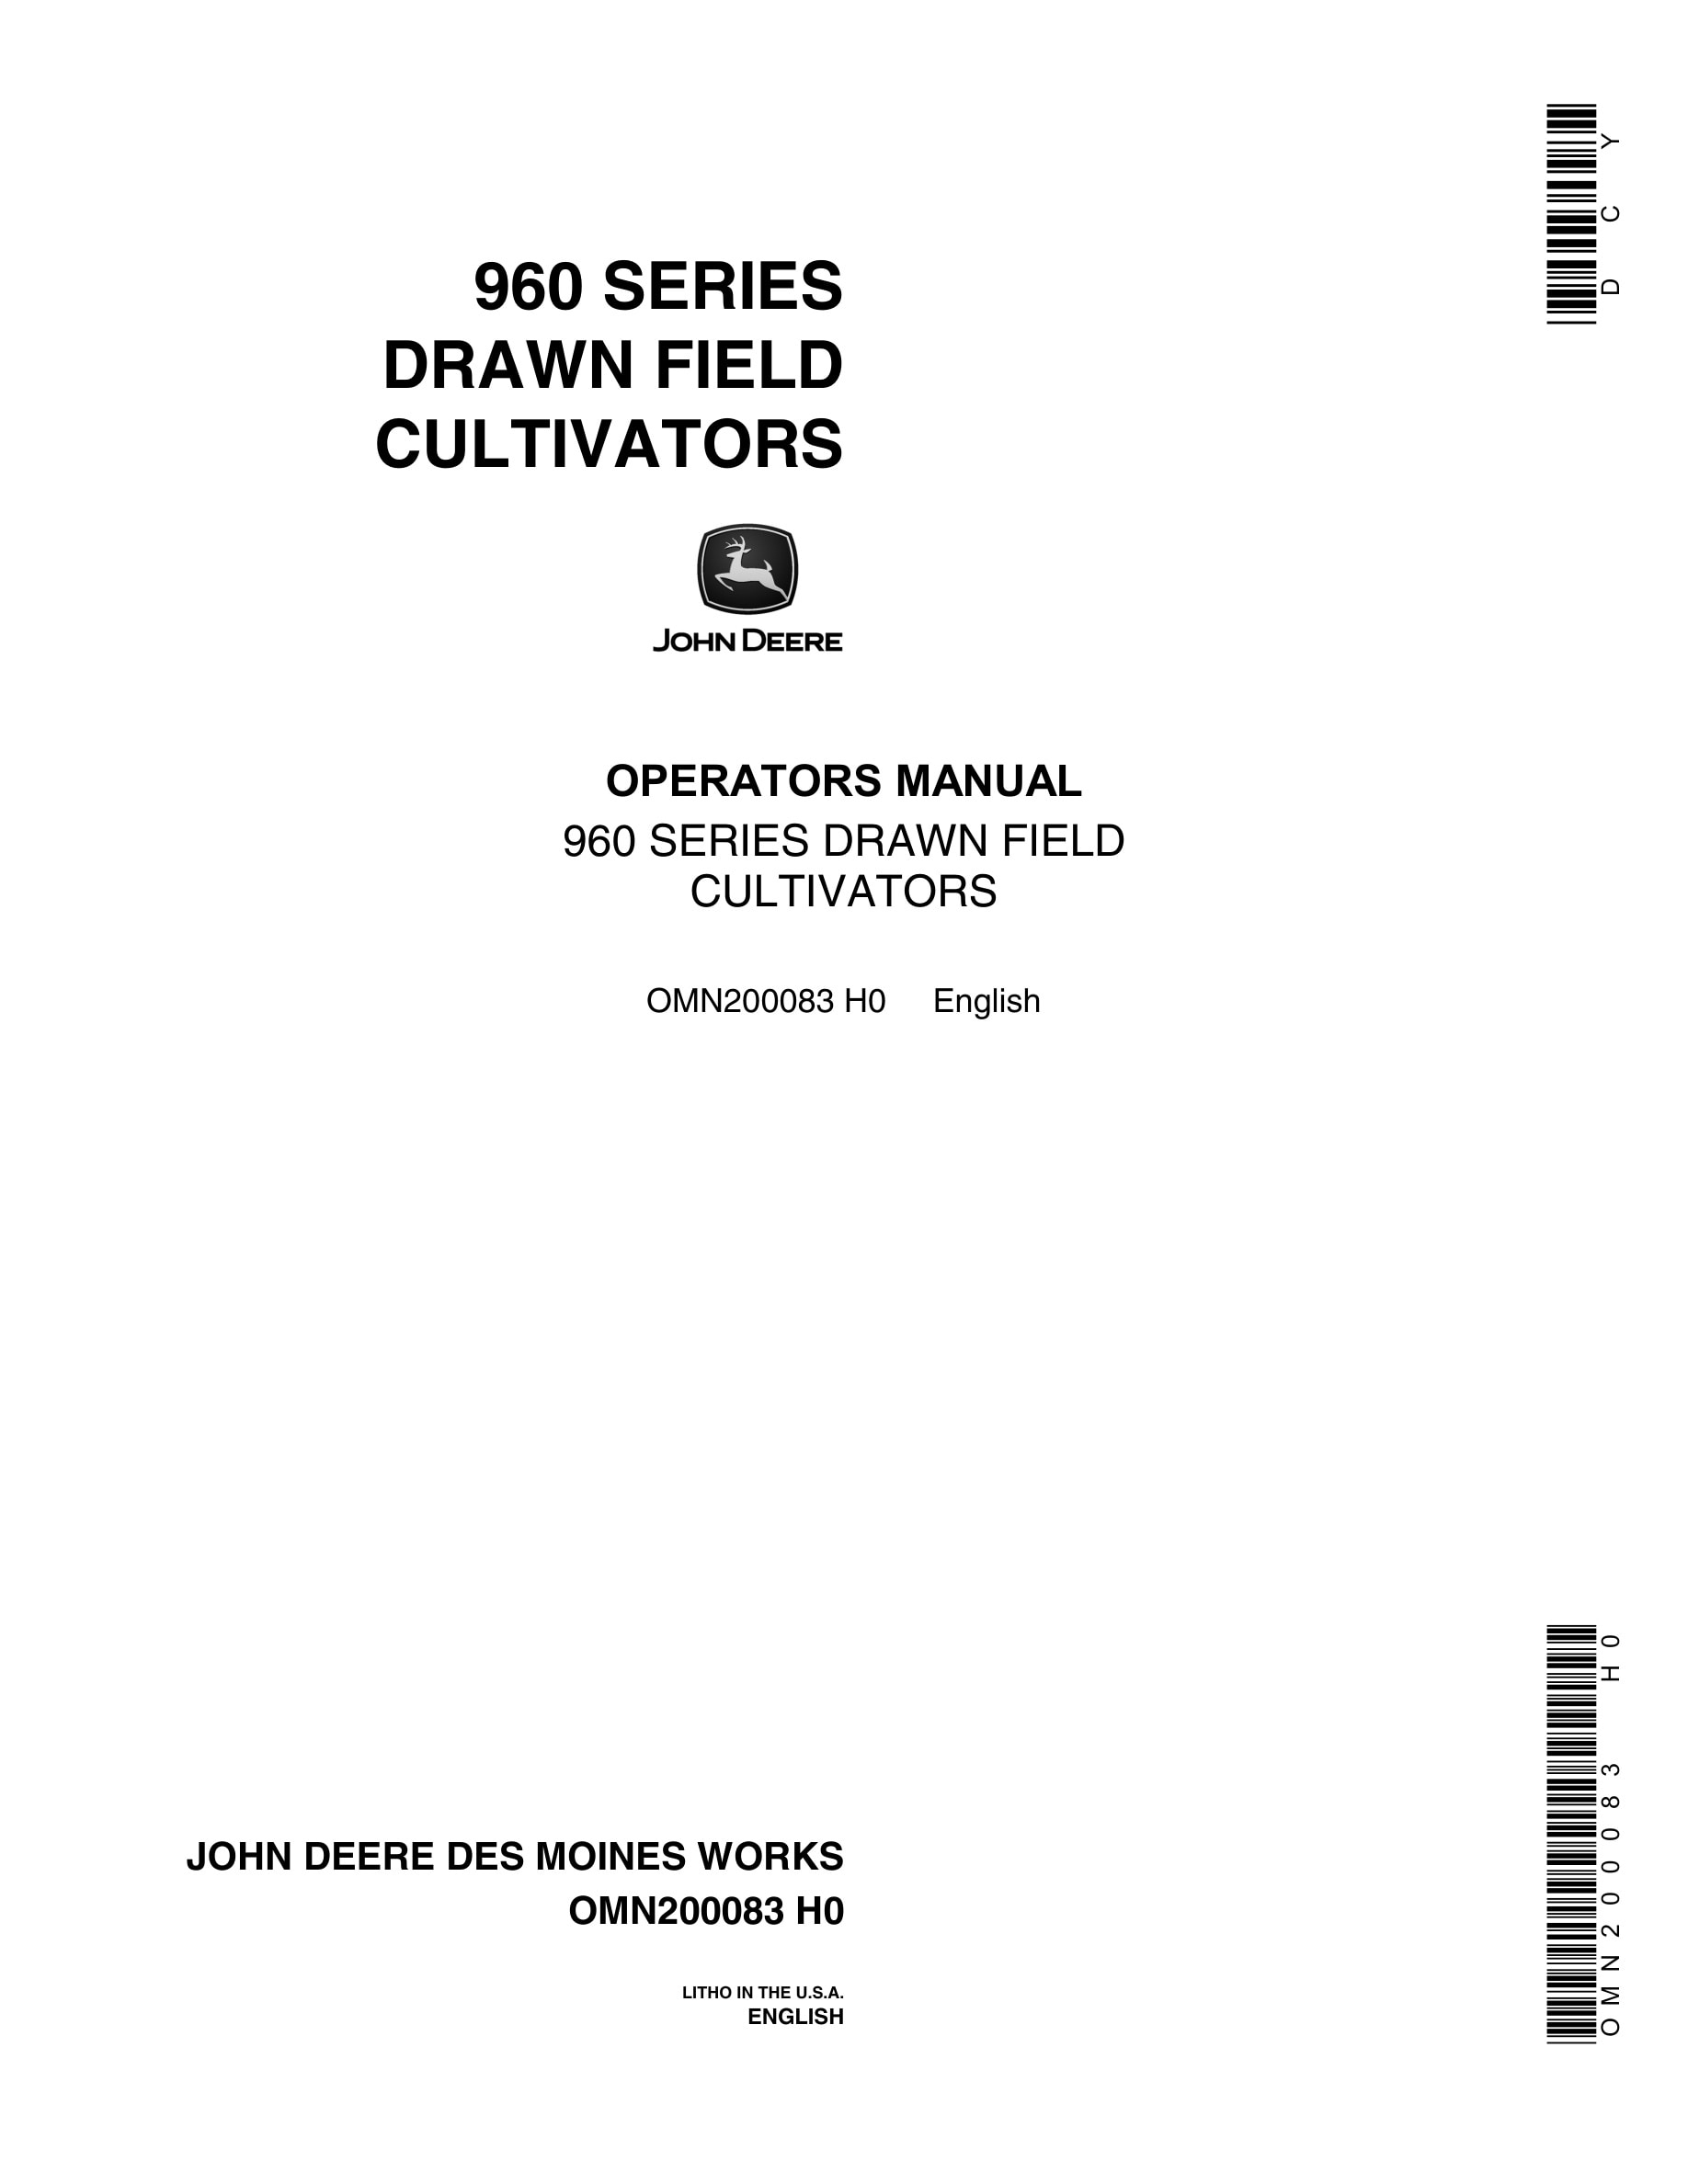 John Deere 960 SERIES DRAWN FIELD CULTIVATOR Operator Manual OMN200083-1